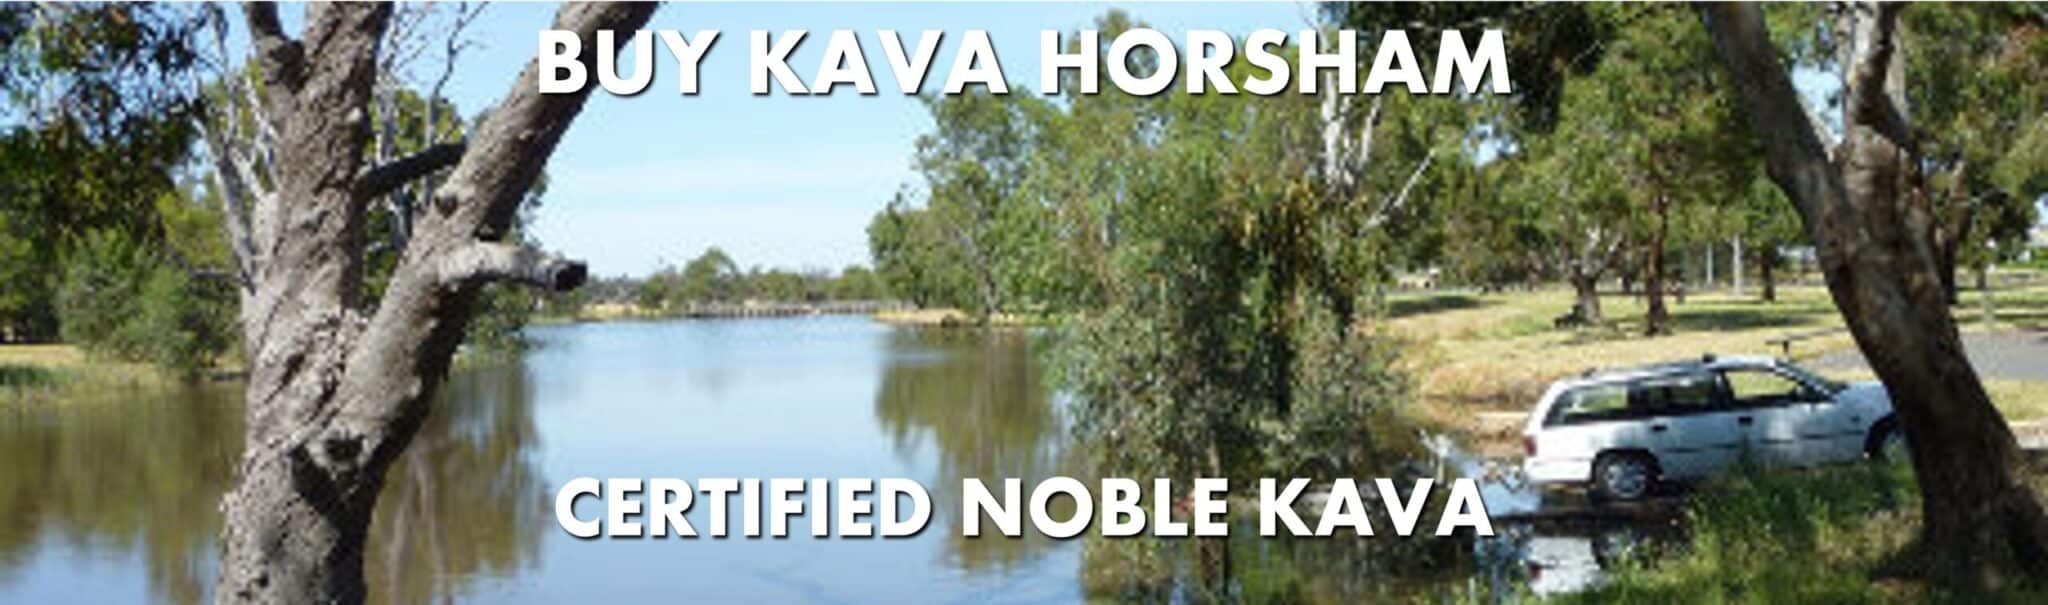 River Scene in Horsham Victoria with caption Buy Kava Horsham Certified Noble Kava